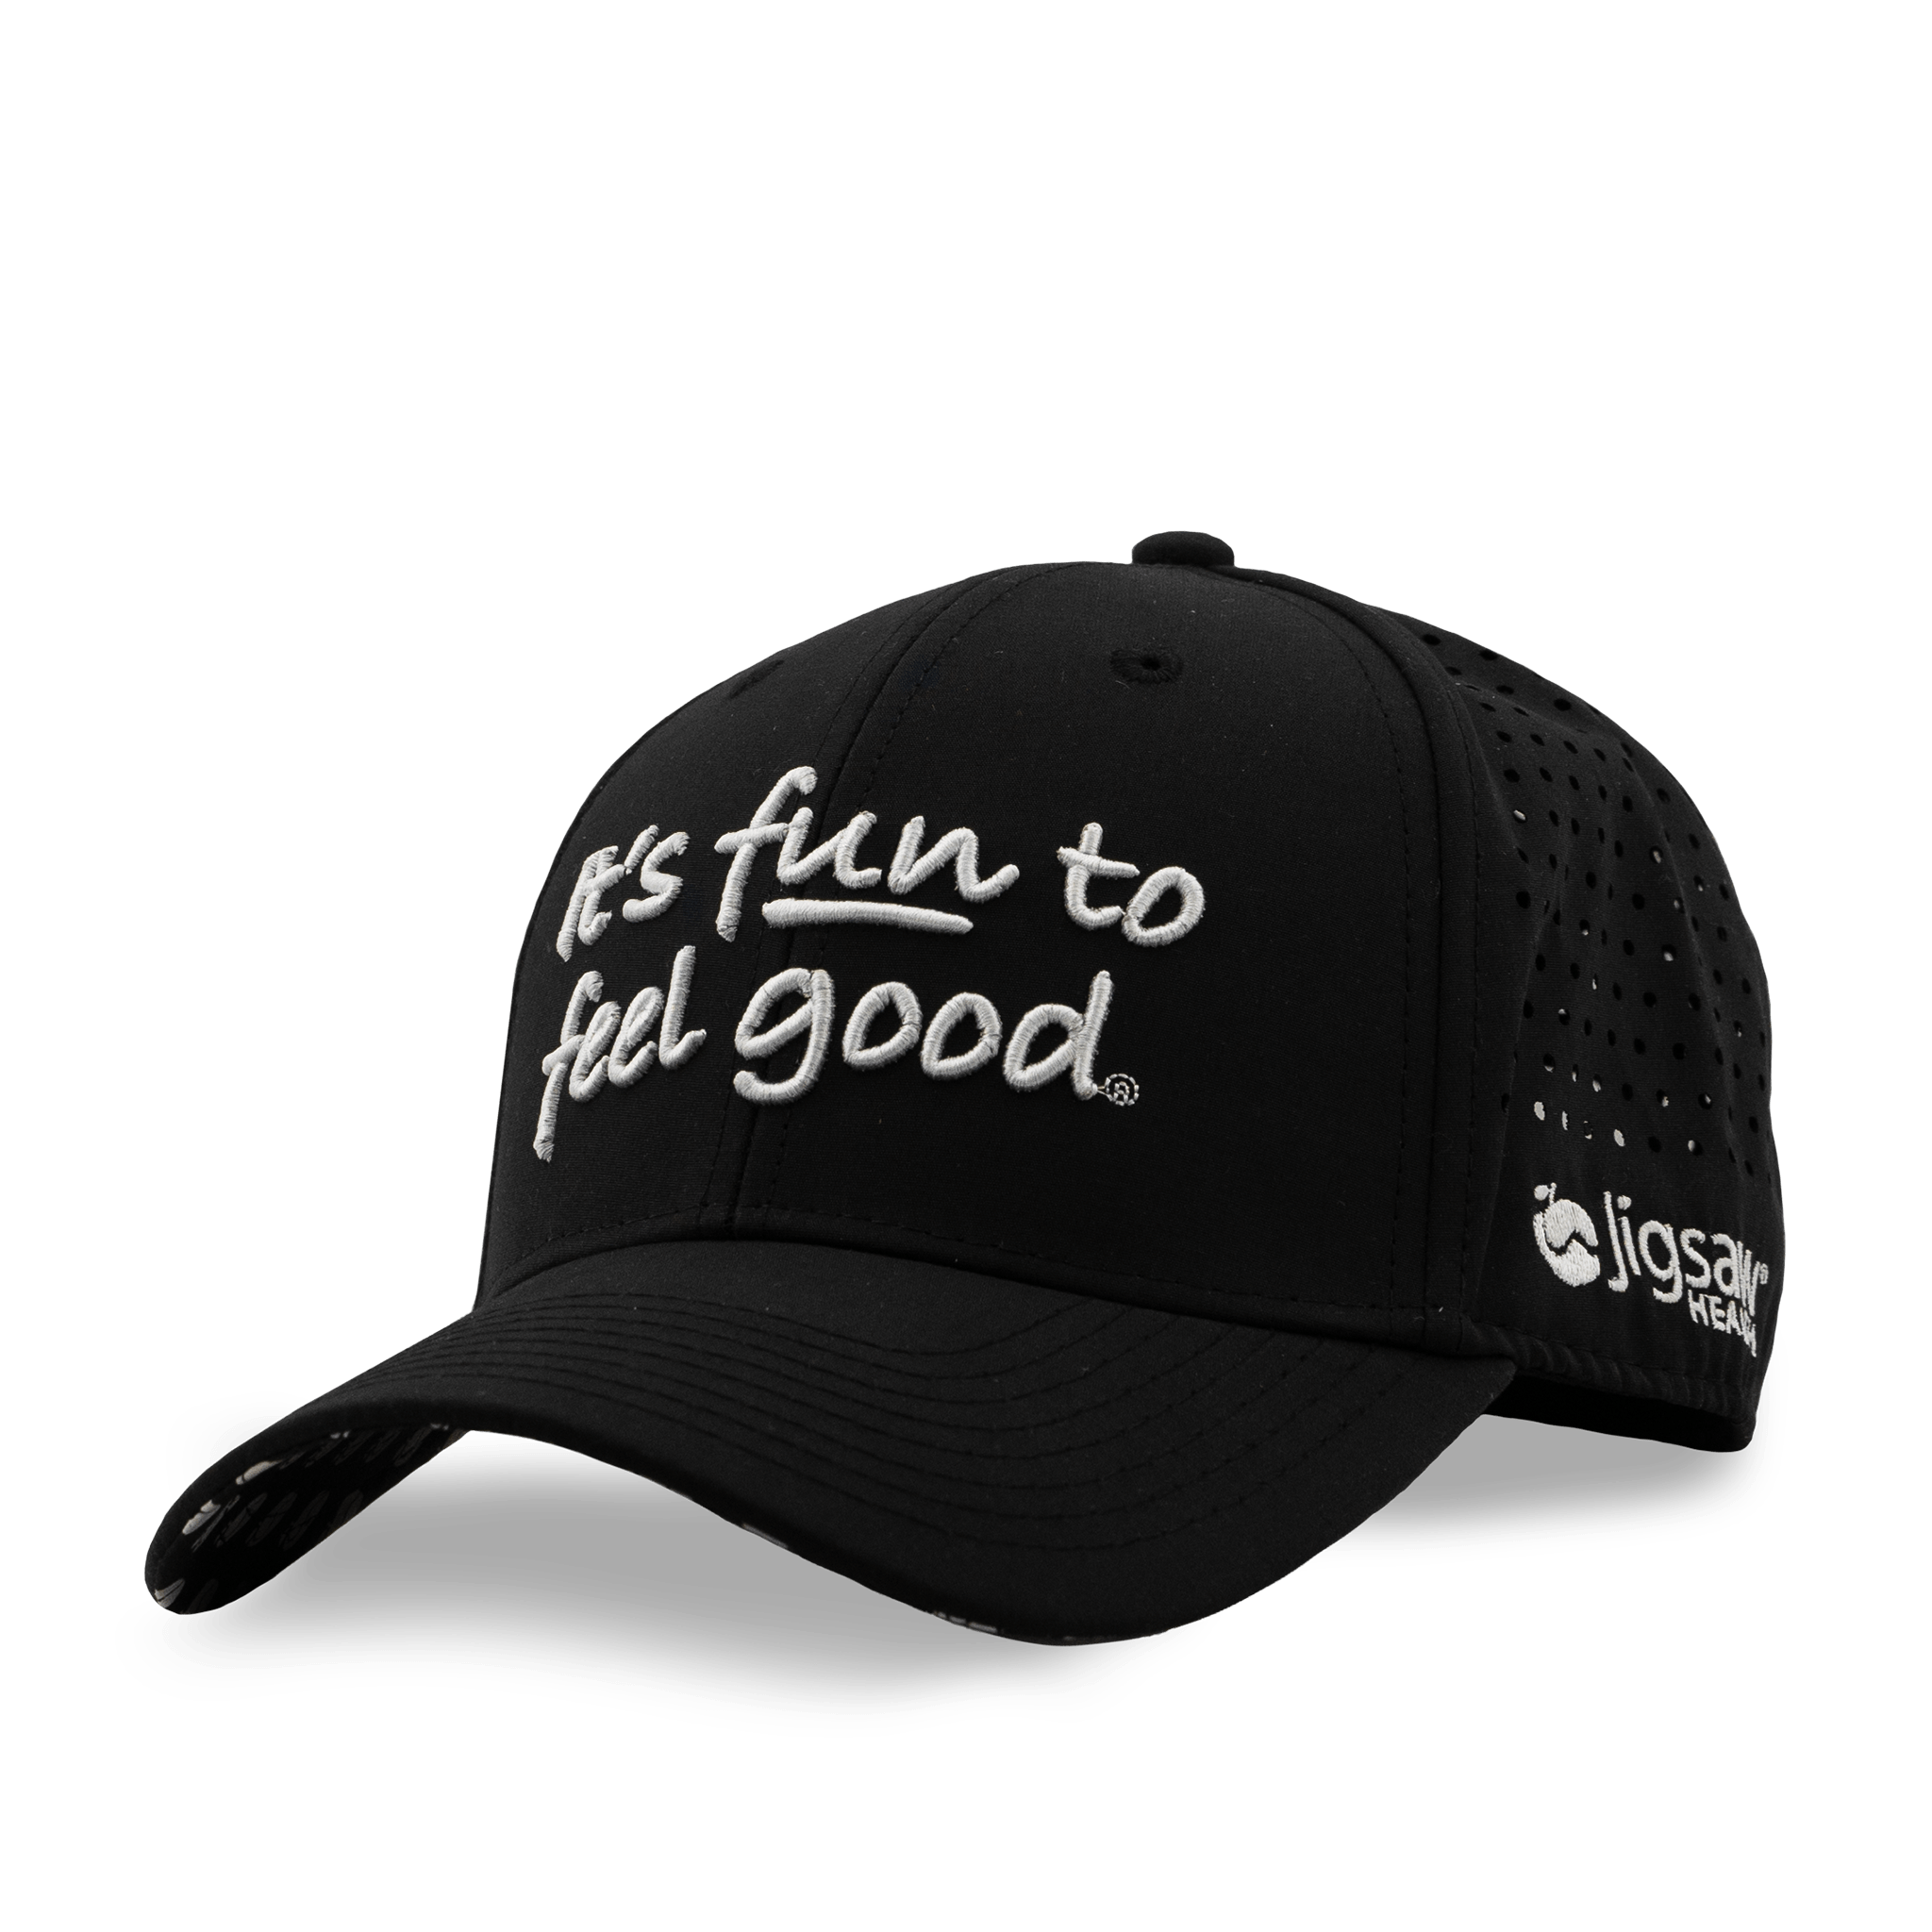 Sport Hat - It's Fun to Feel Good®